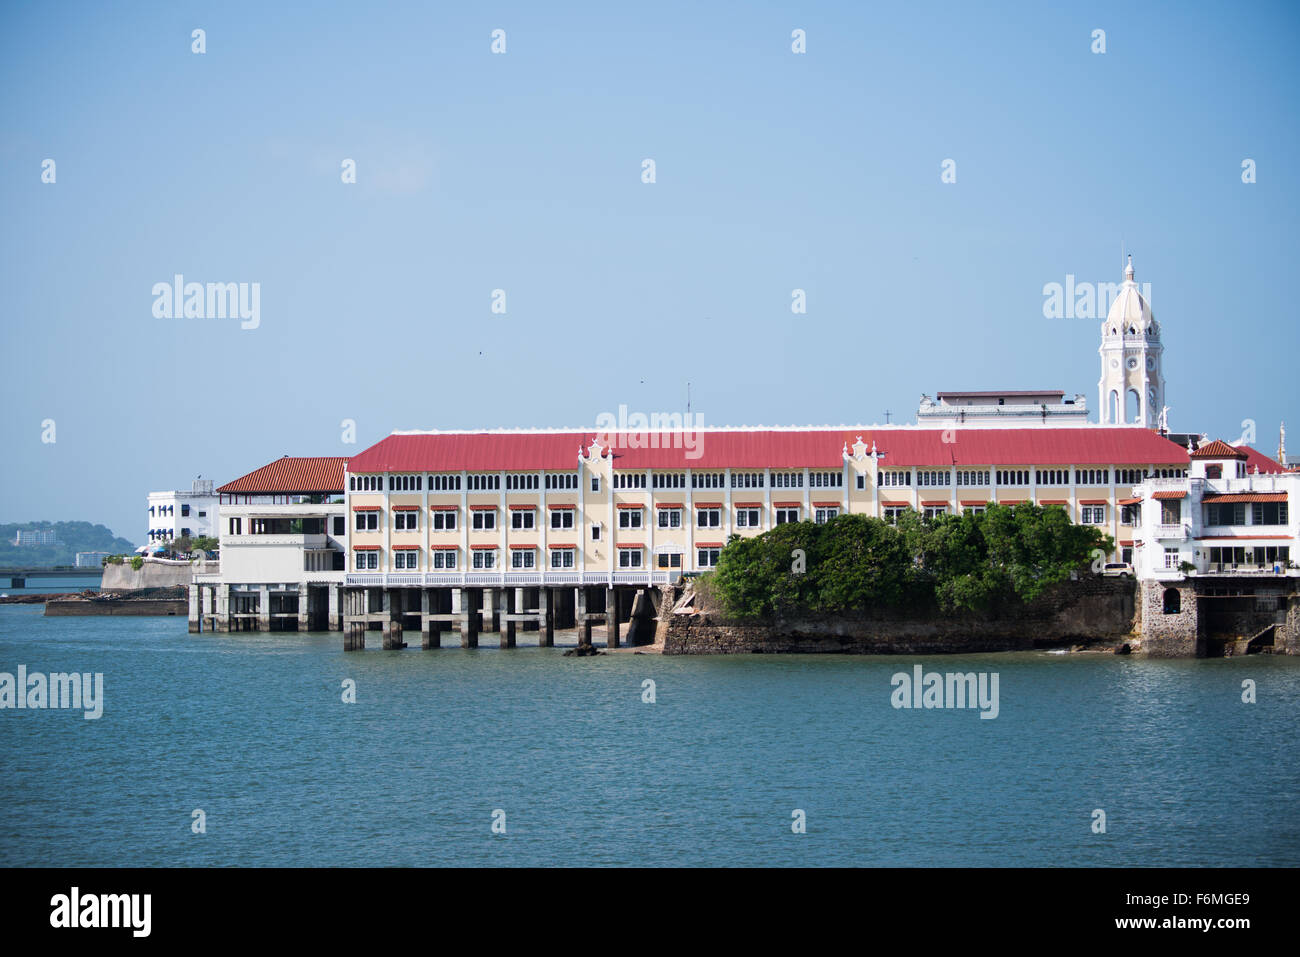 PANAMA CITY, Panama - historische Gebäude an der Küste von Panama City, Panama, Panama-Bucht. Stockfoto